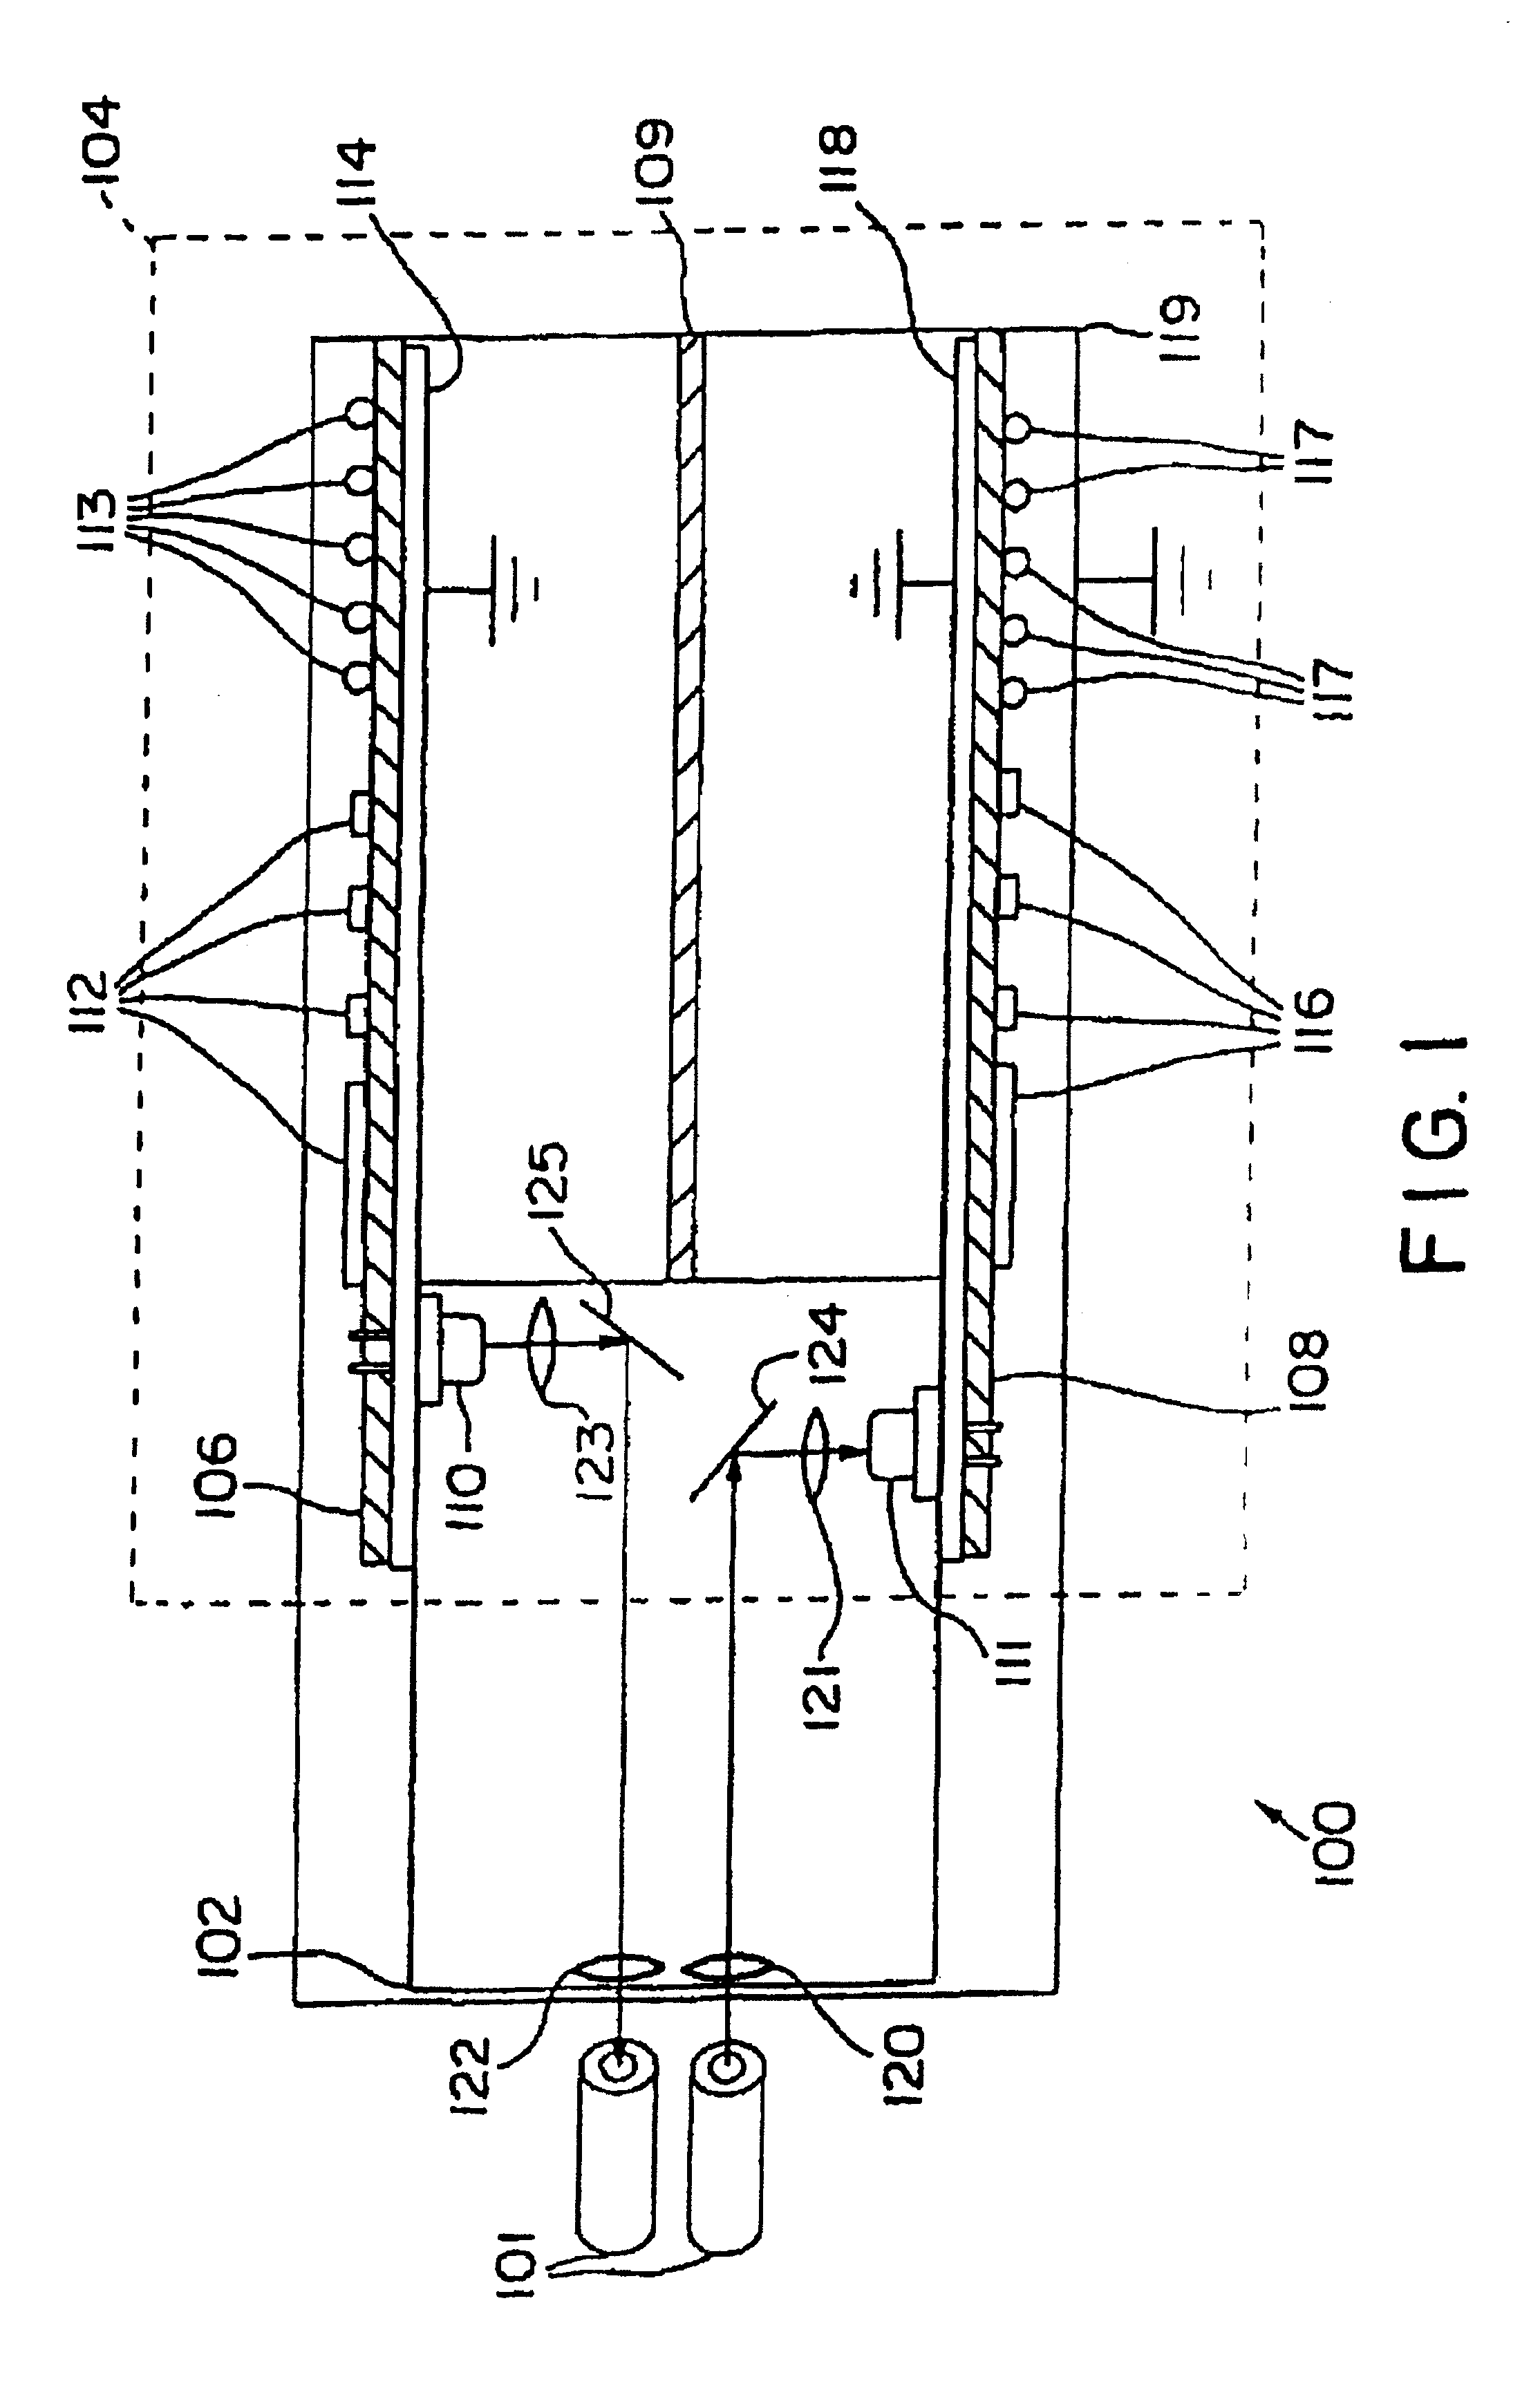 Method and apparatus for pluggable fiber optic modules